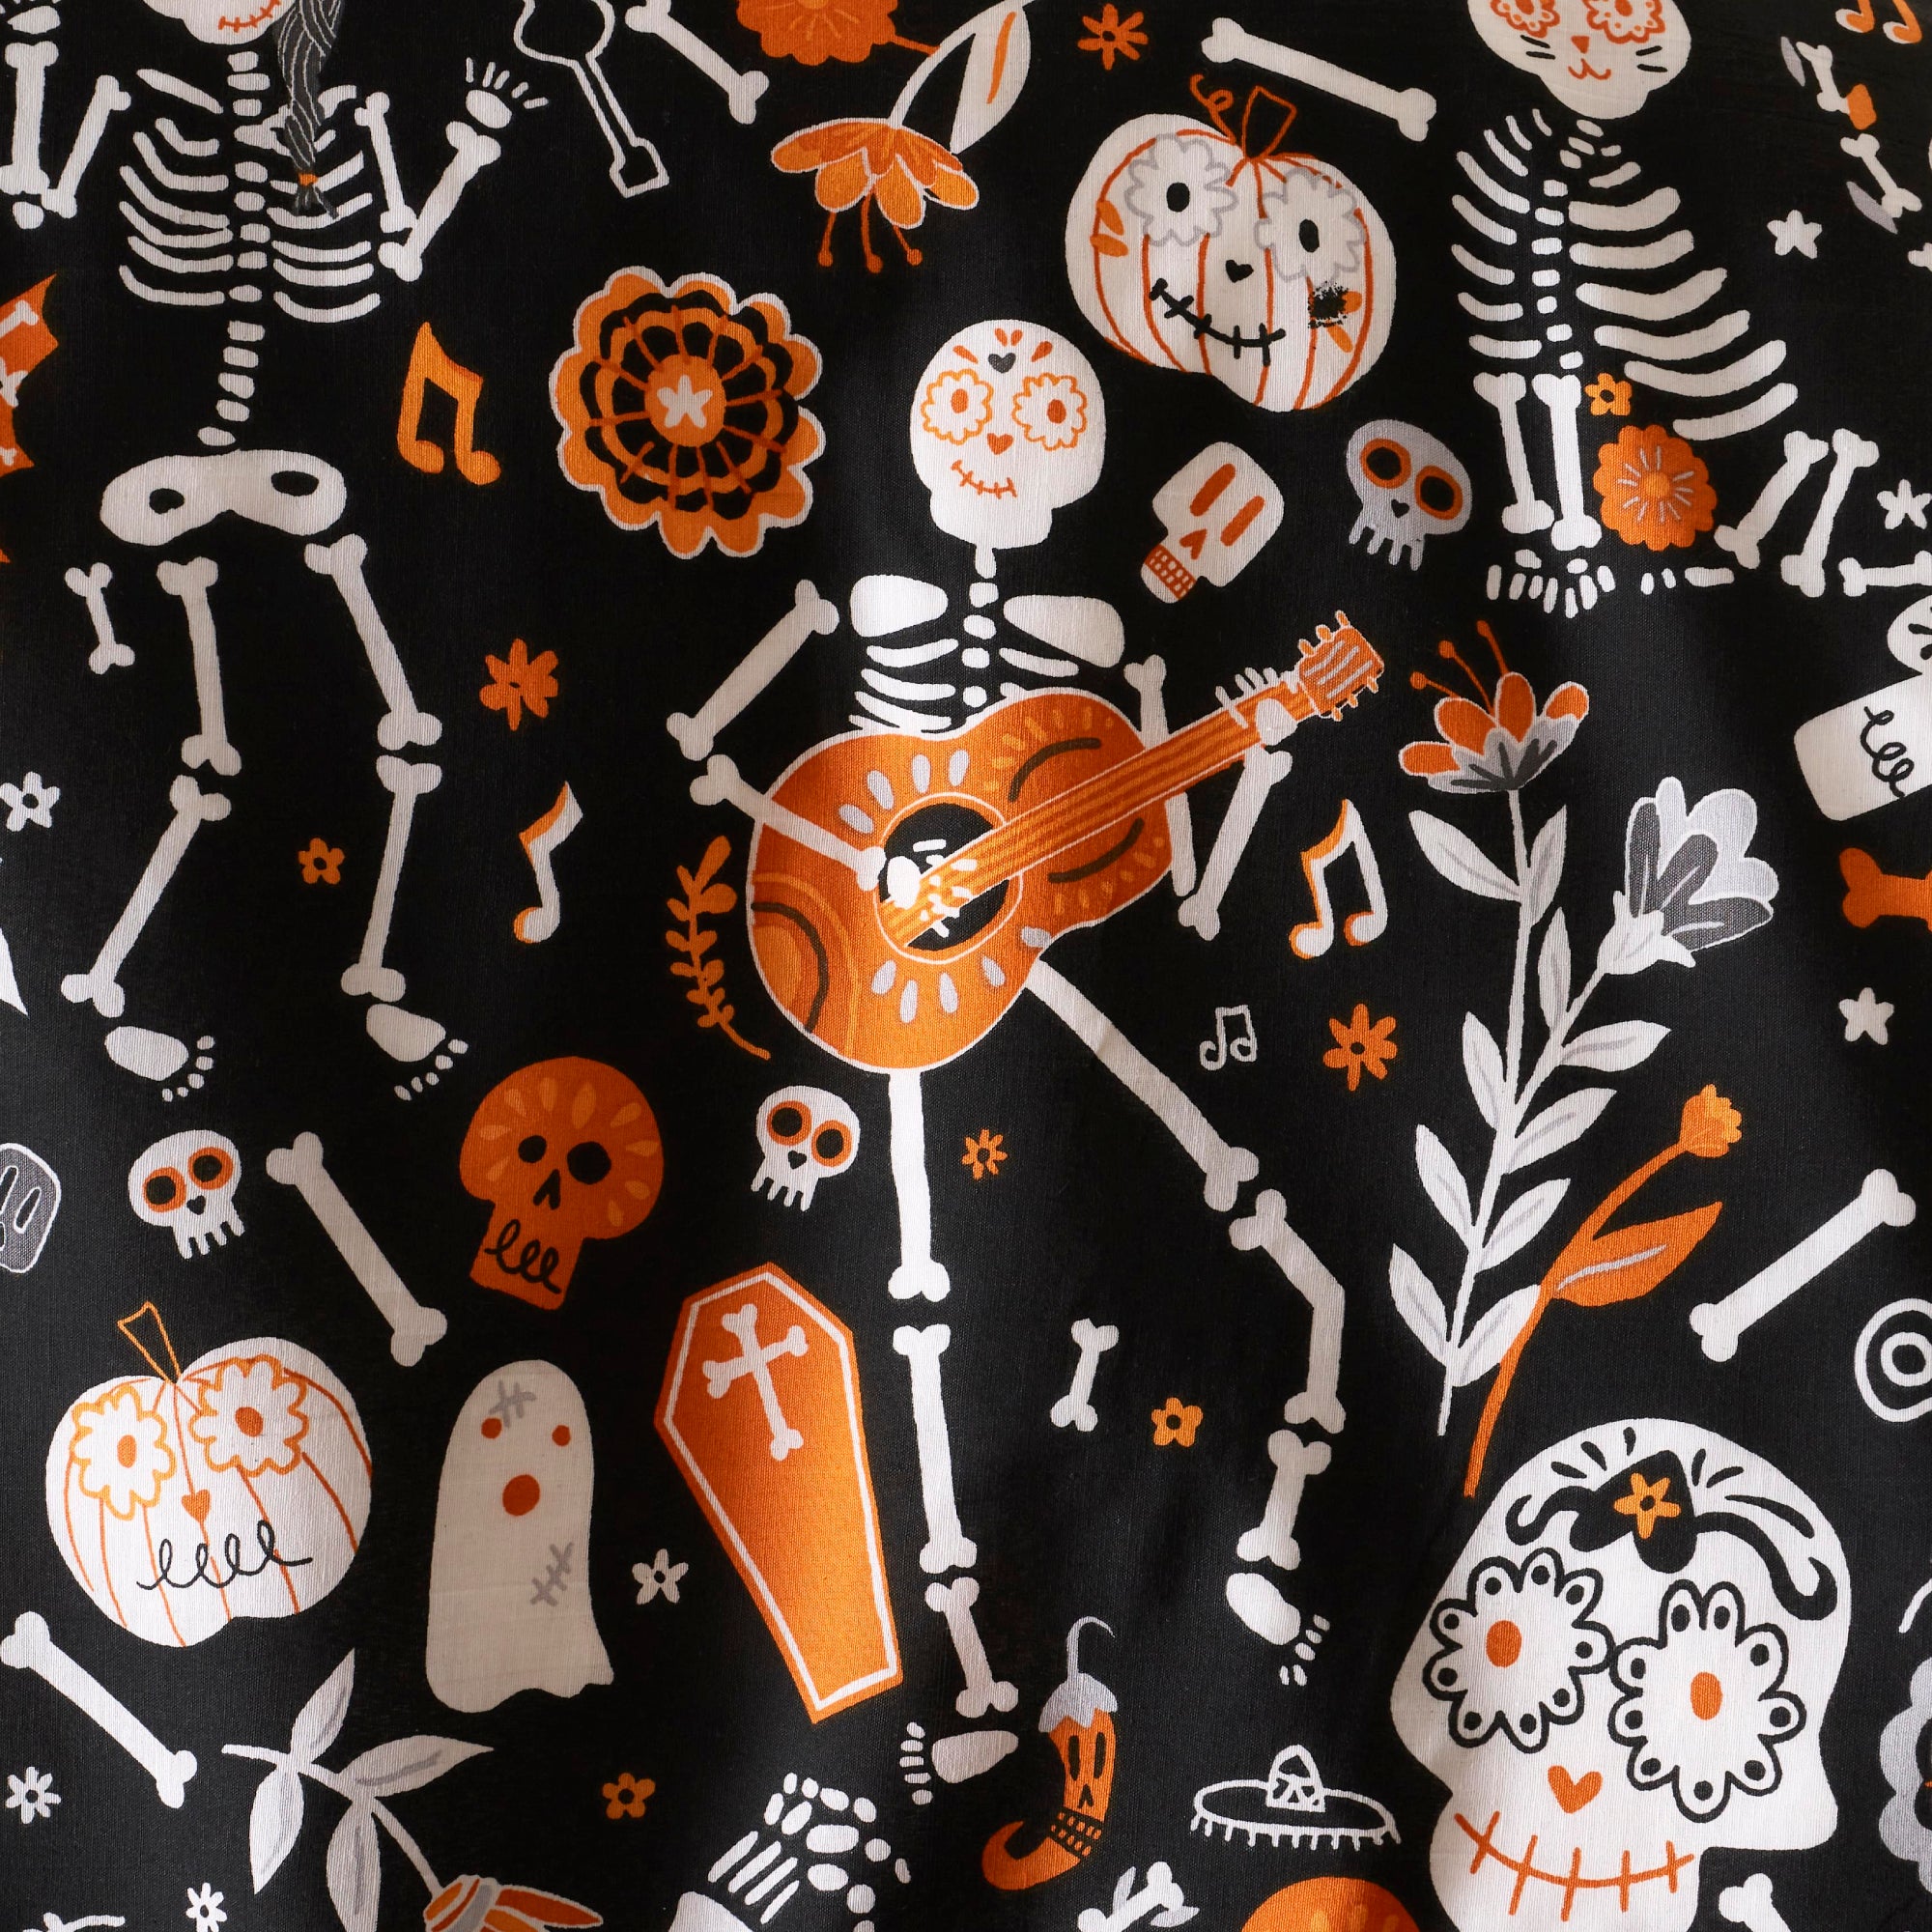 Duvet Cover Set Halloween Day of the Dead by Bedlam in Black/Orange